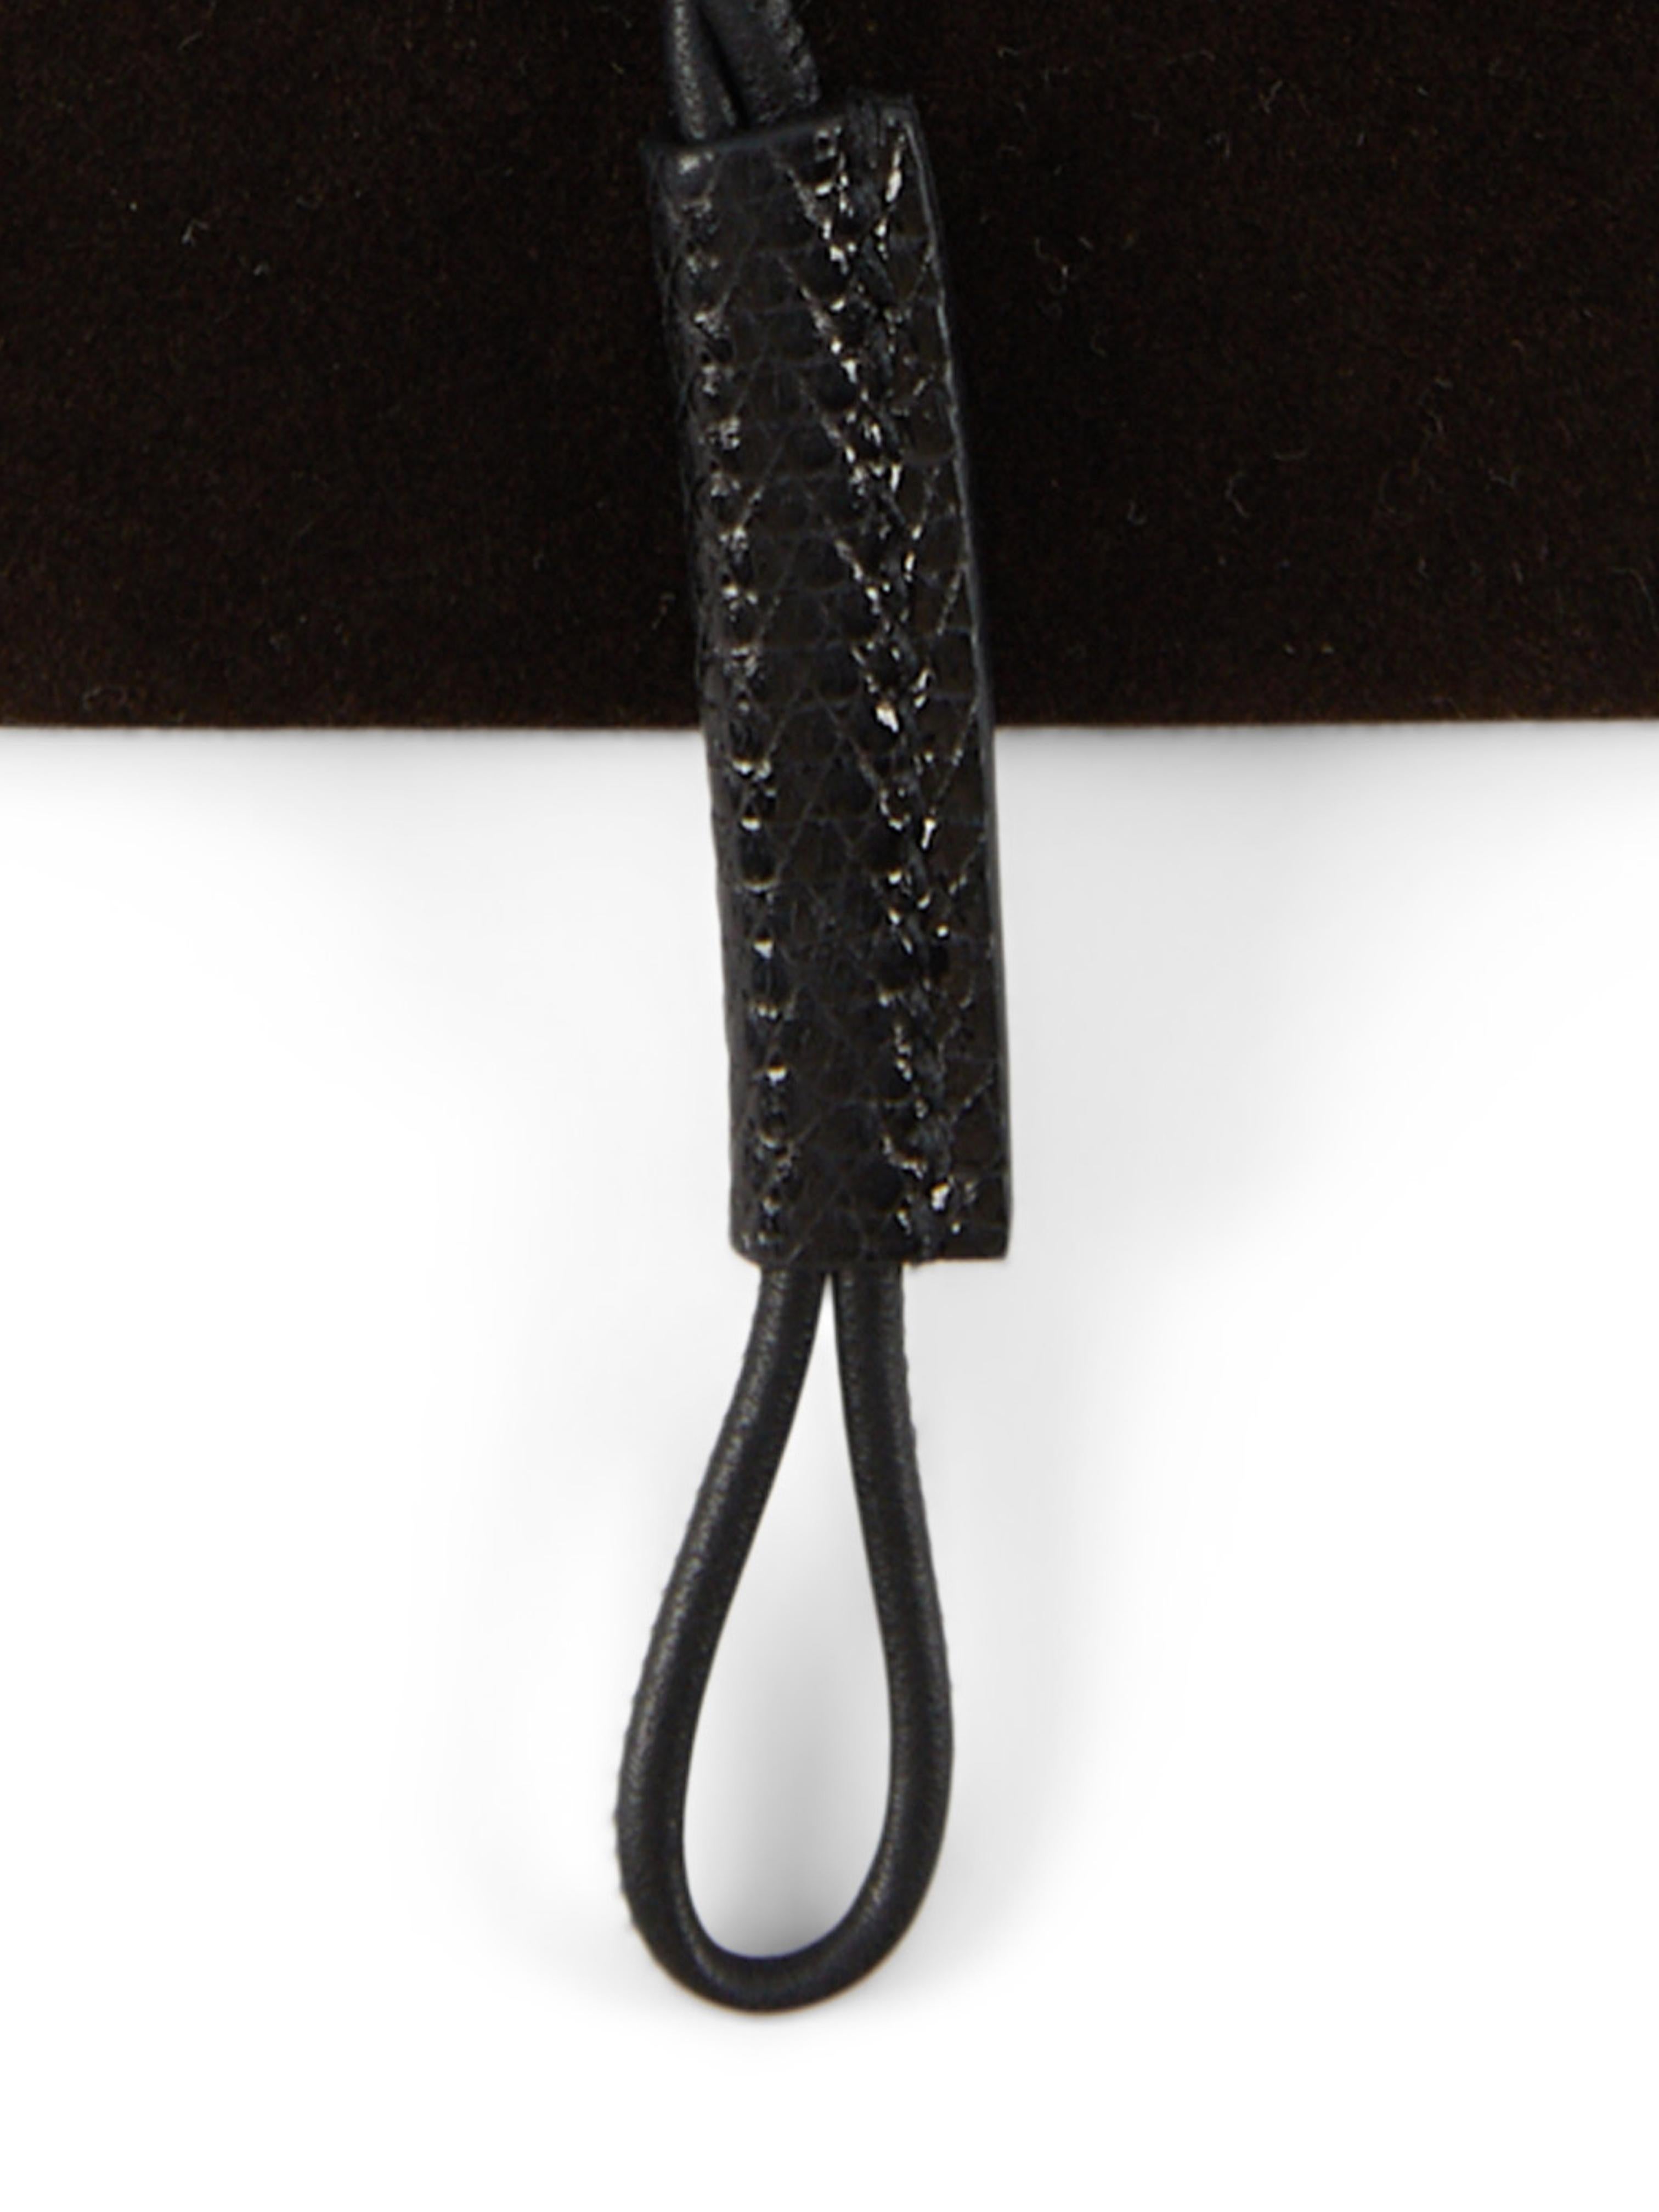 Hermès Curiosite Necklace is Black

Lizard Leather

Chain length: 40.5 cm 

Accompanied by: Hermès box and ribbon